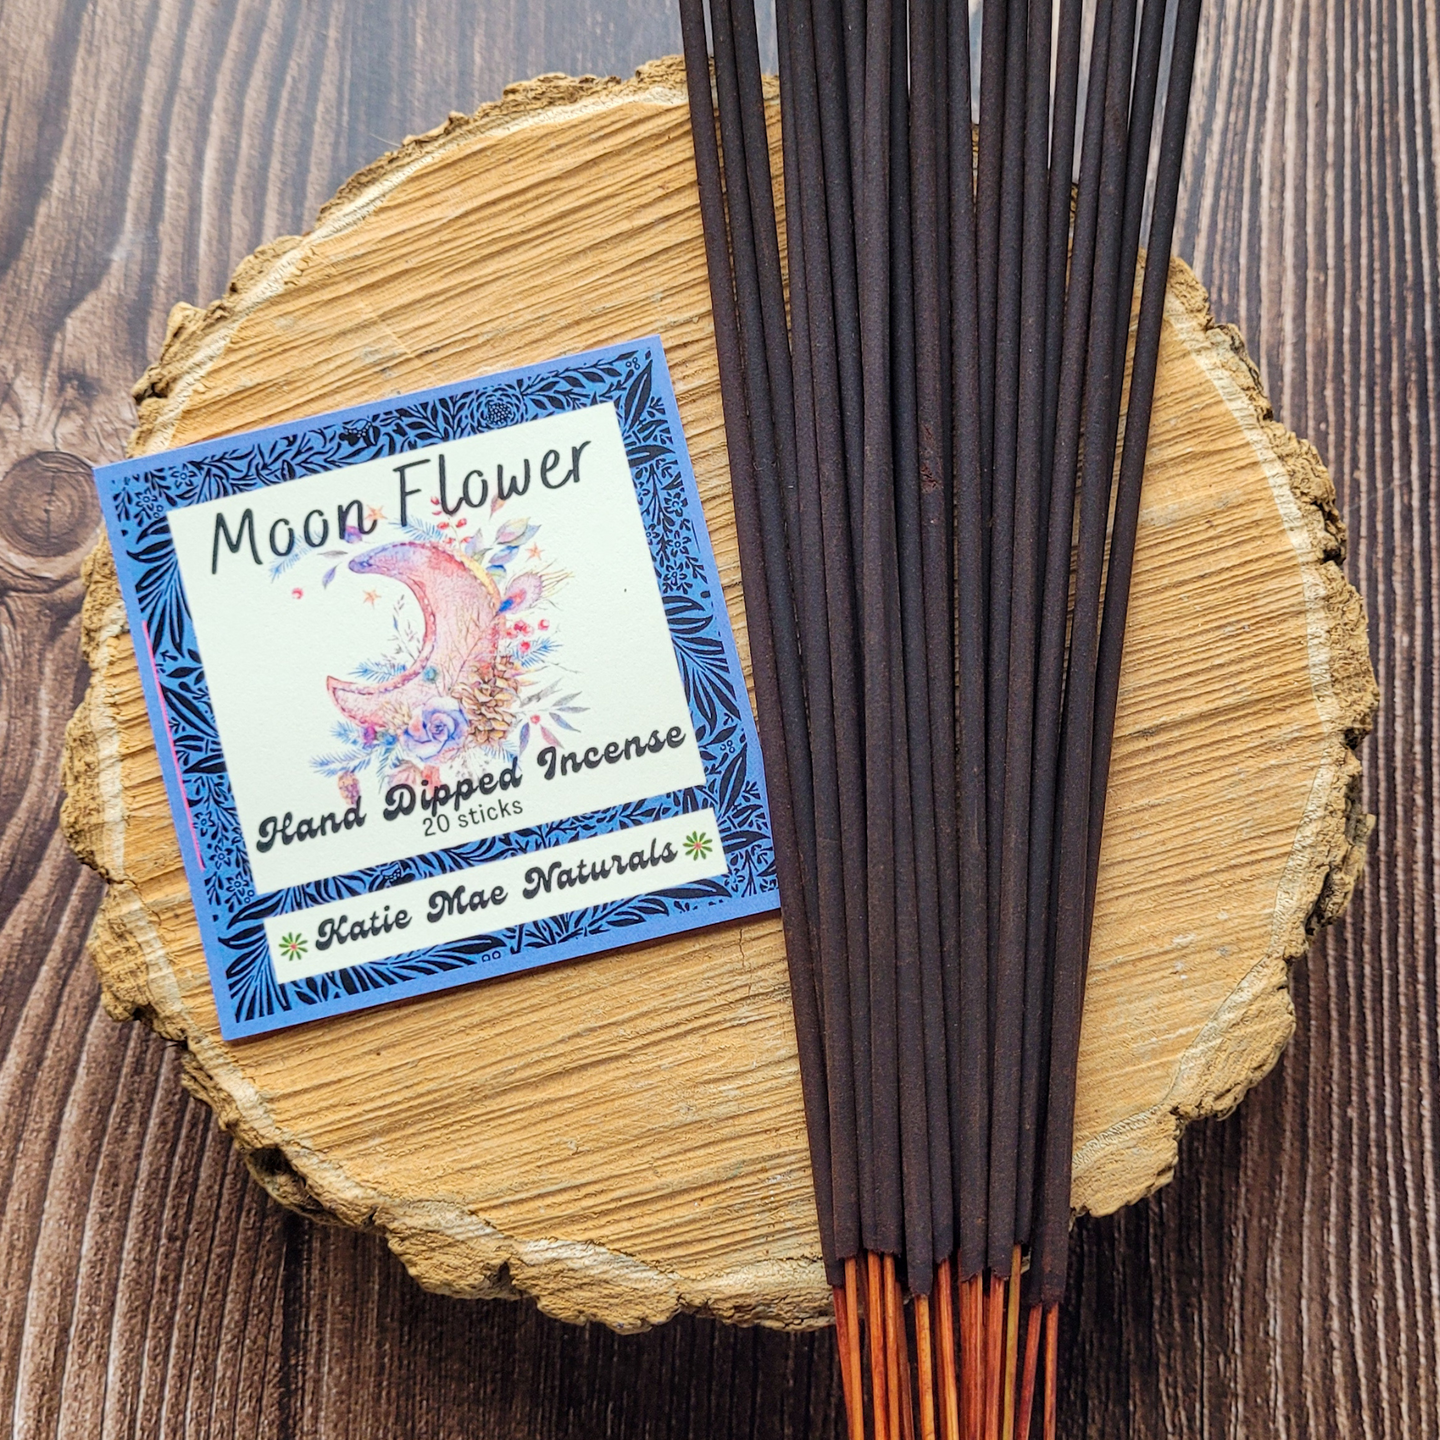 Moon flower incense sticks 